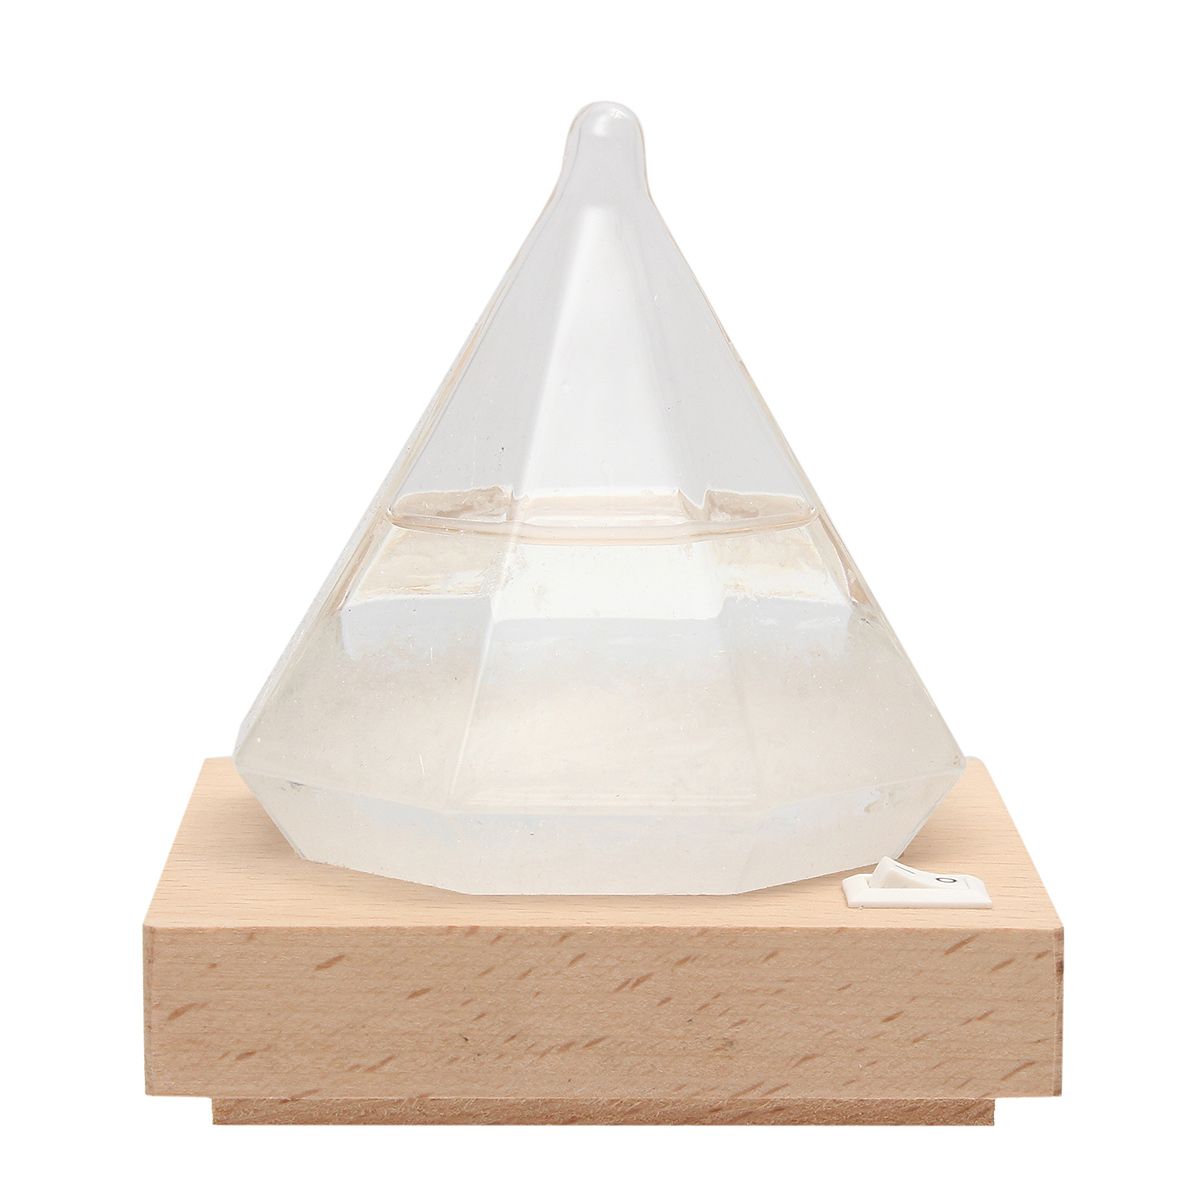 Creative Diamond Shape Storm Glass avec LED Base Novel Previsions meteorologiques Home Decor